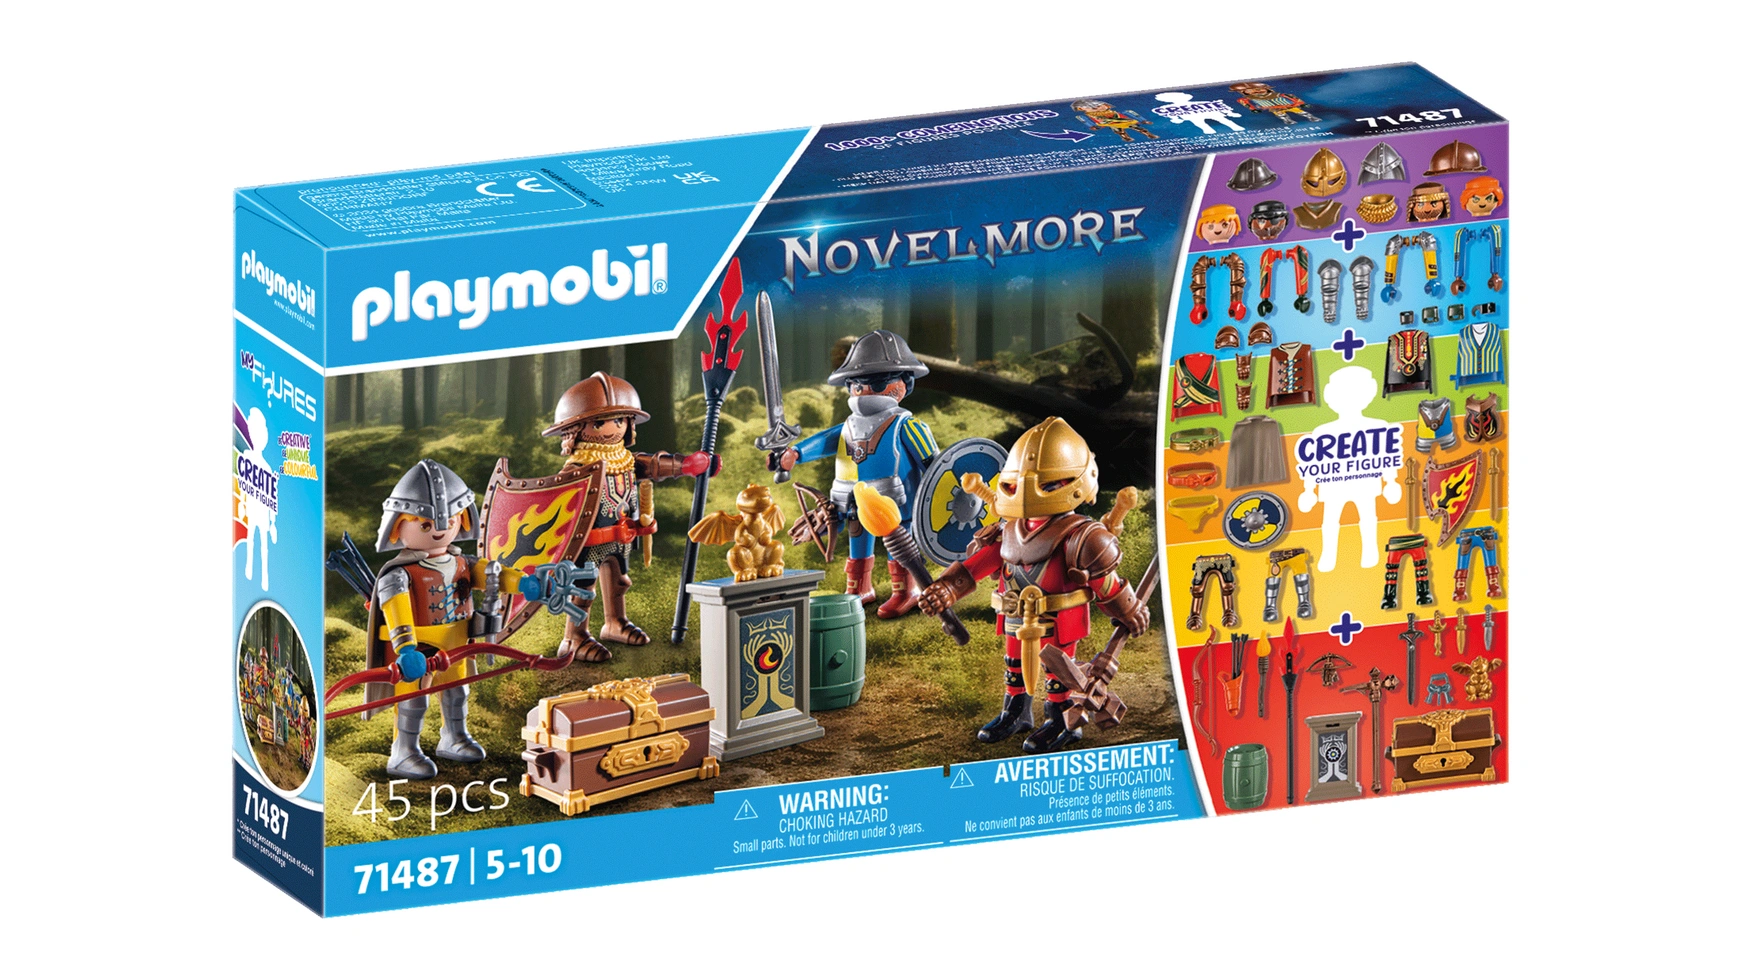 Novelmore мои фигурки: рыцари новелмора Playmobil